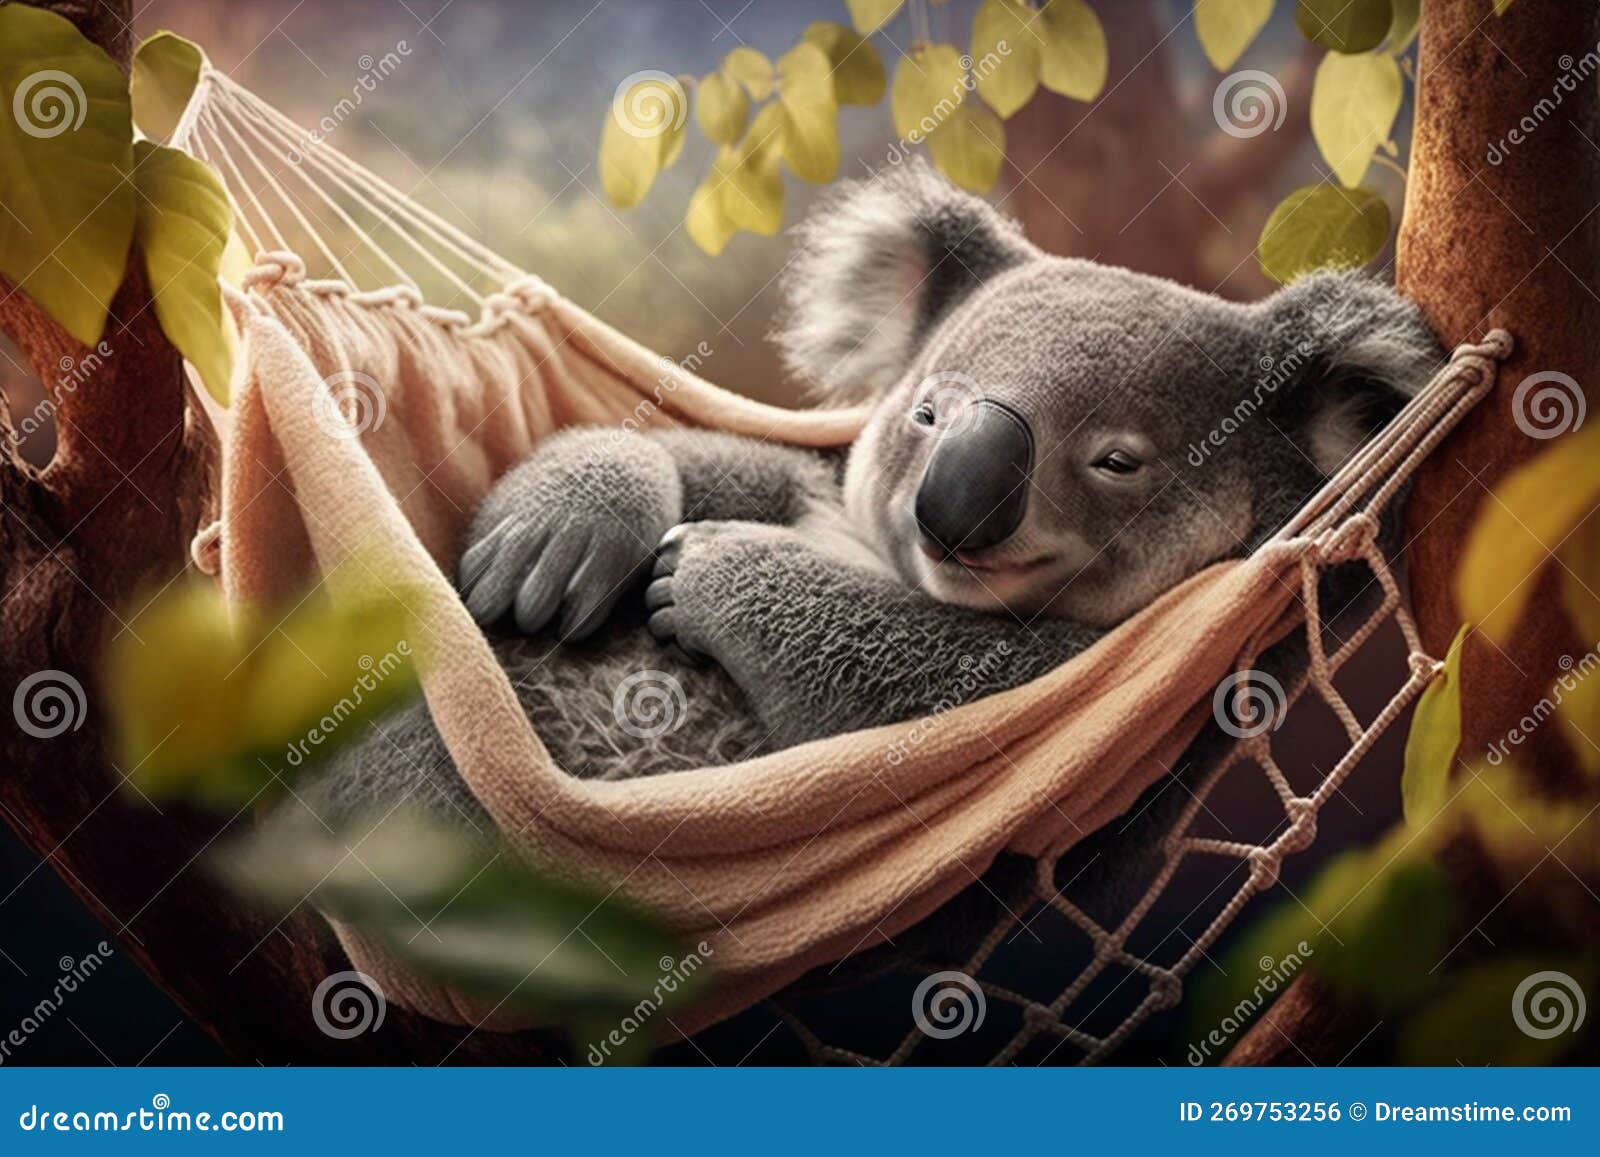 Hamaca as Koala